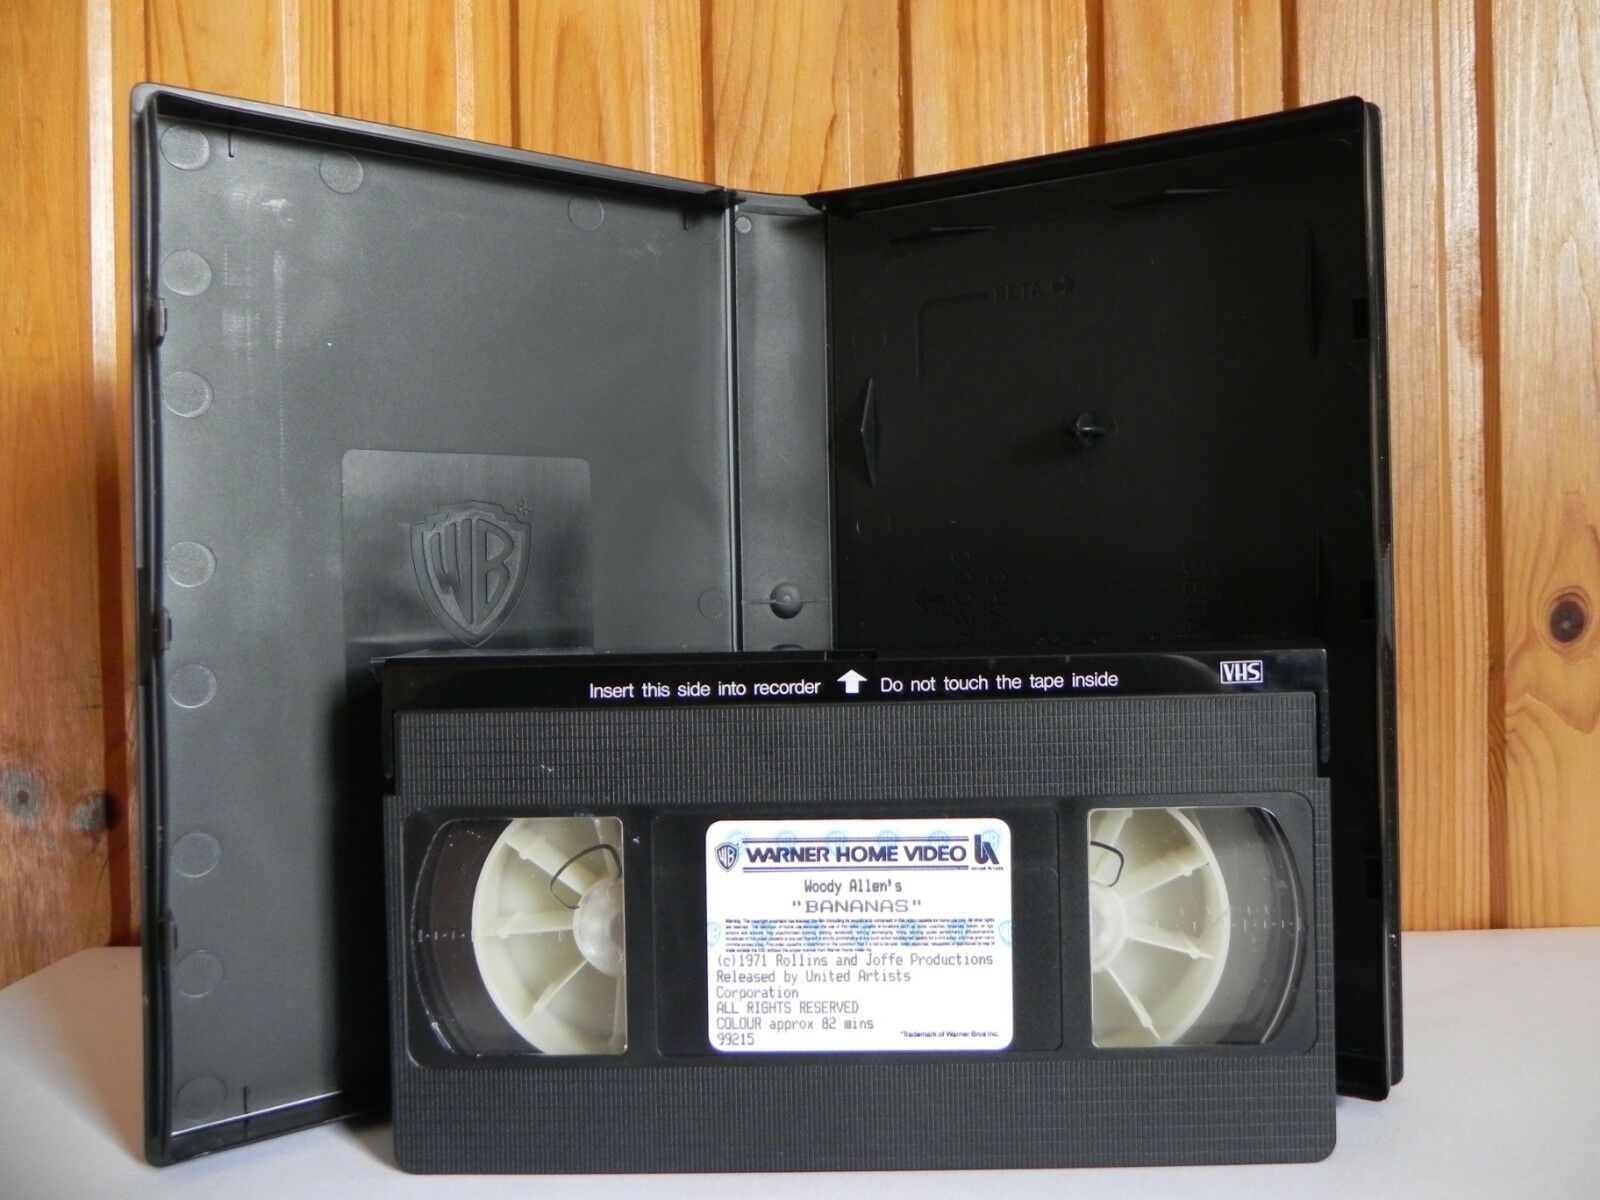 Bananas - Large Box - Warner - Pre-Cert - Comedy - Woody Allen (1979) - Pal VHS-